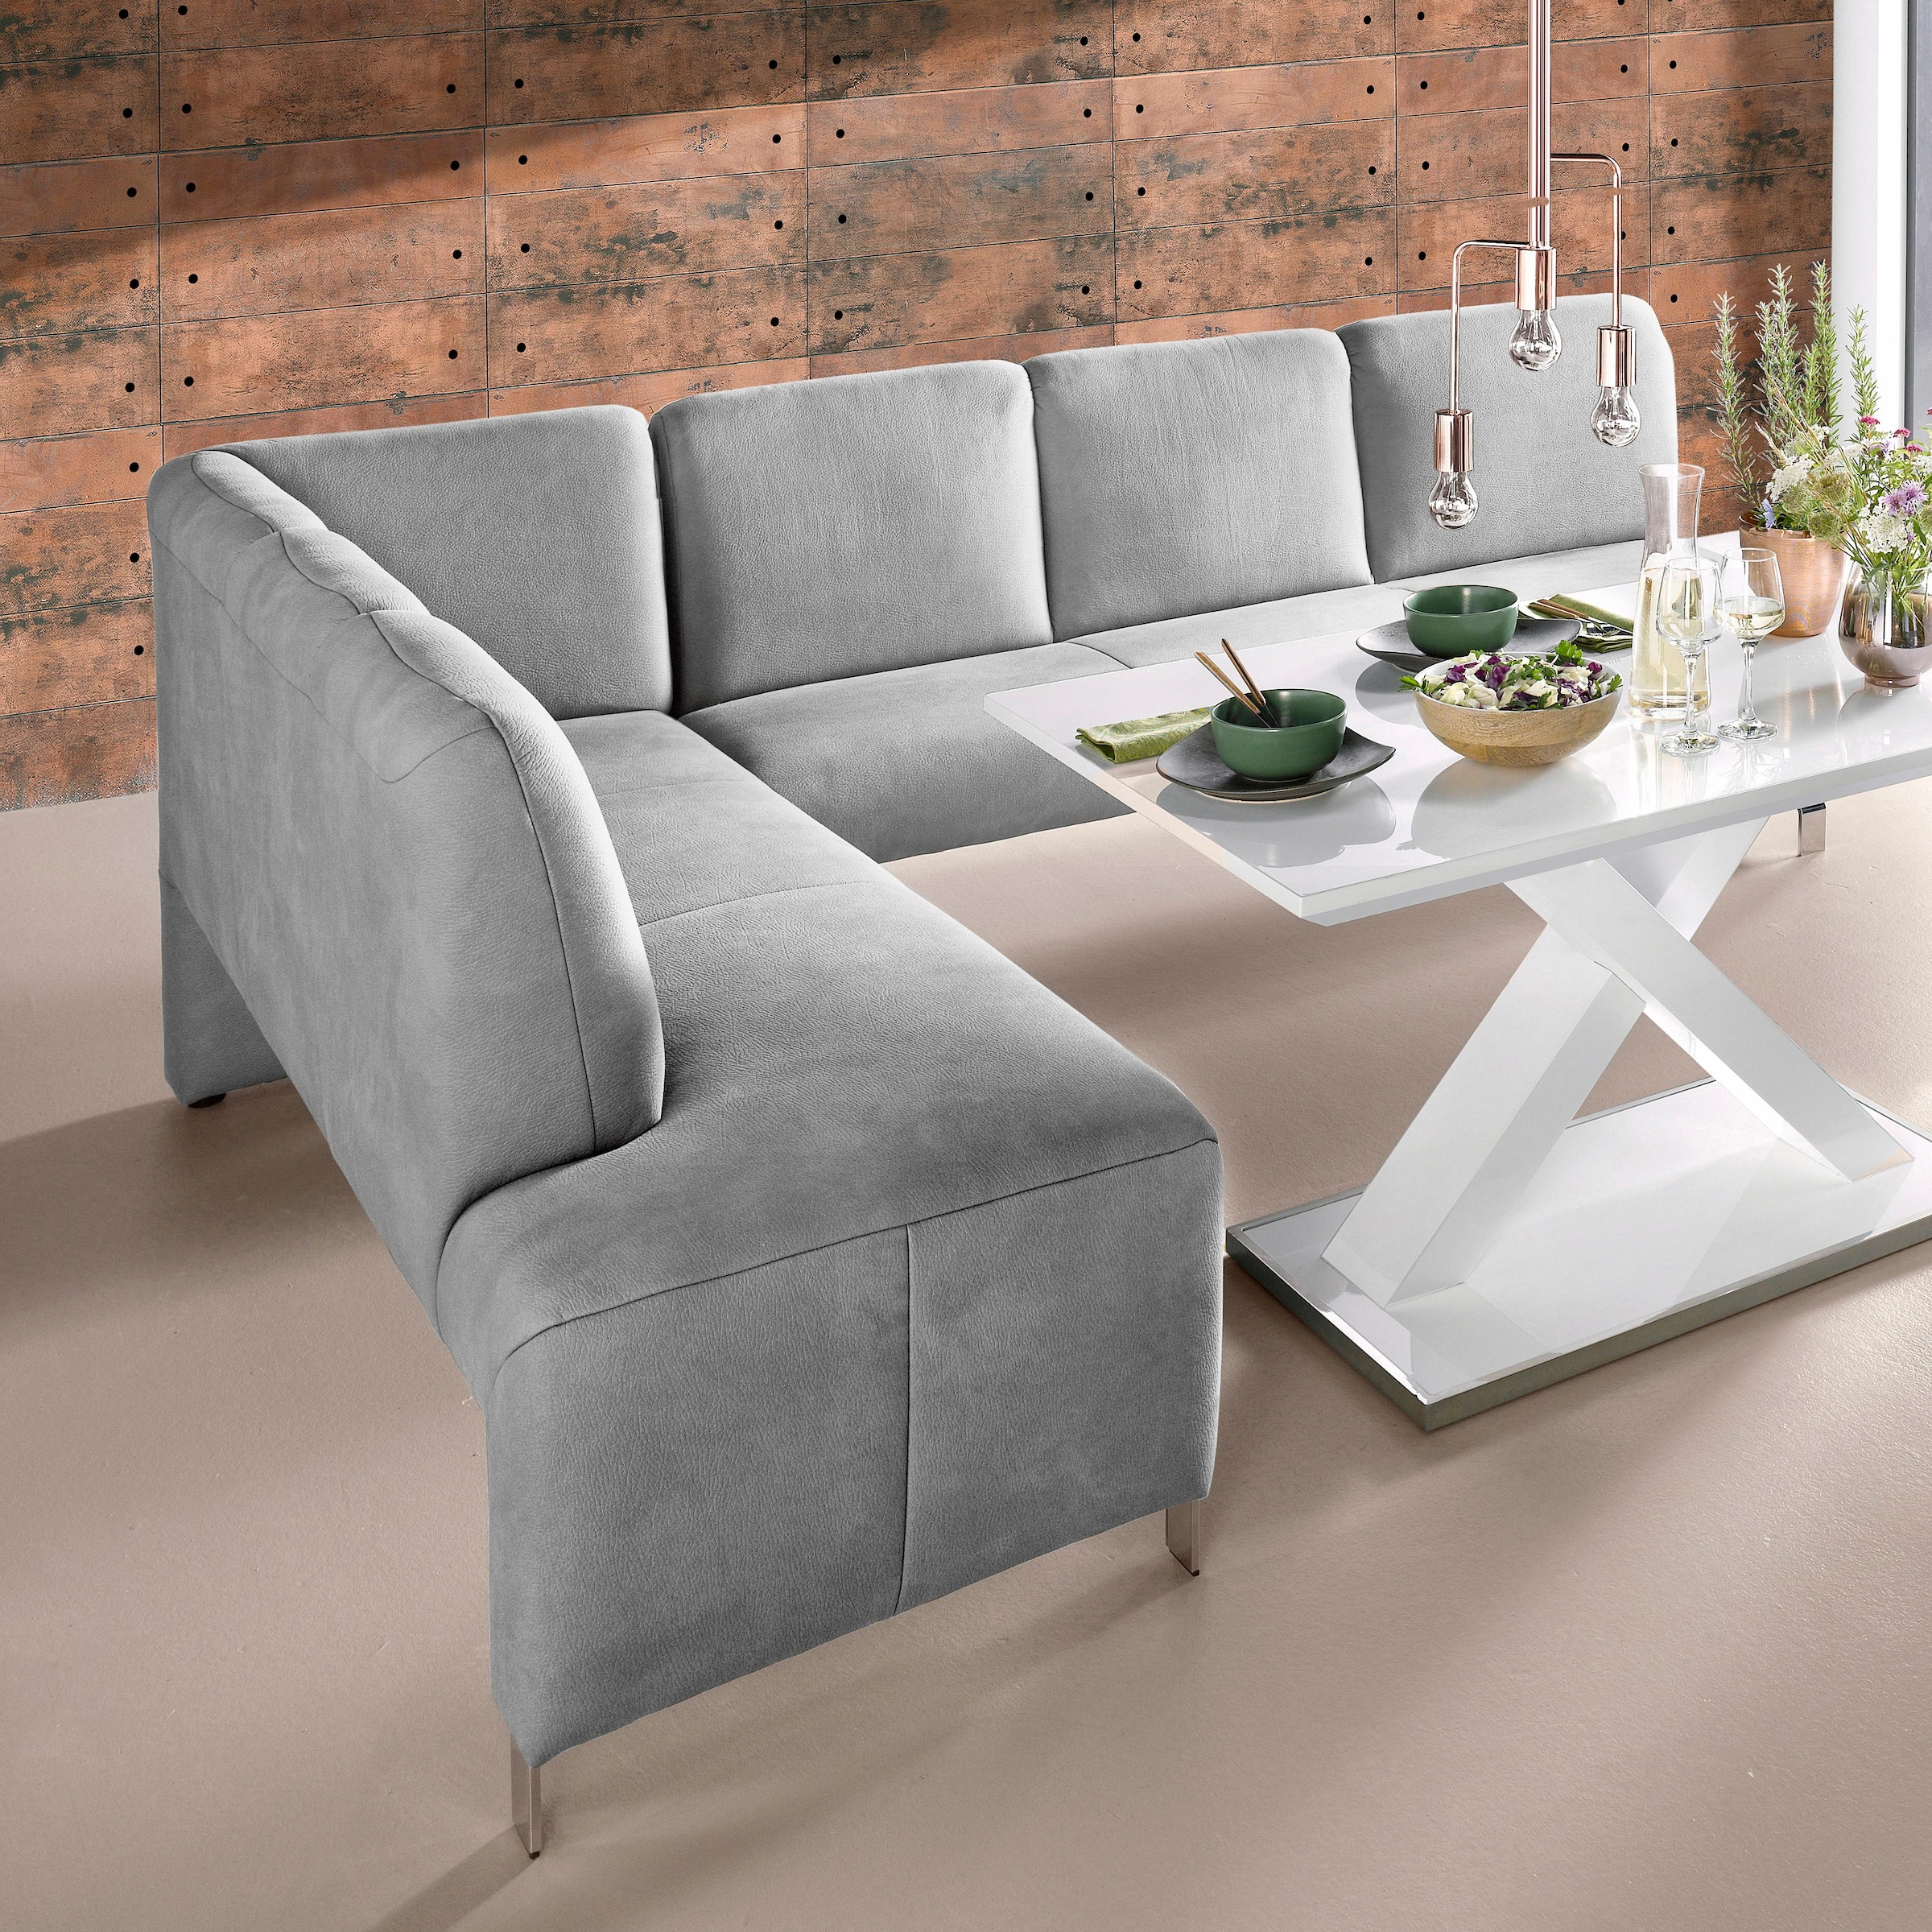 sofa BAUR - Sitzecken & bestellen exxpo | Eckbänke fashion